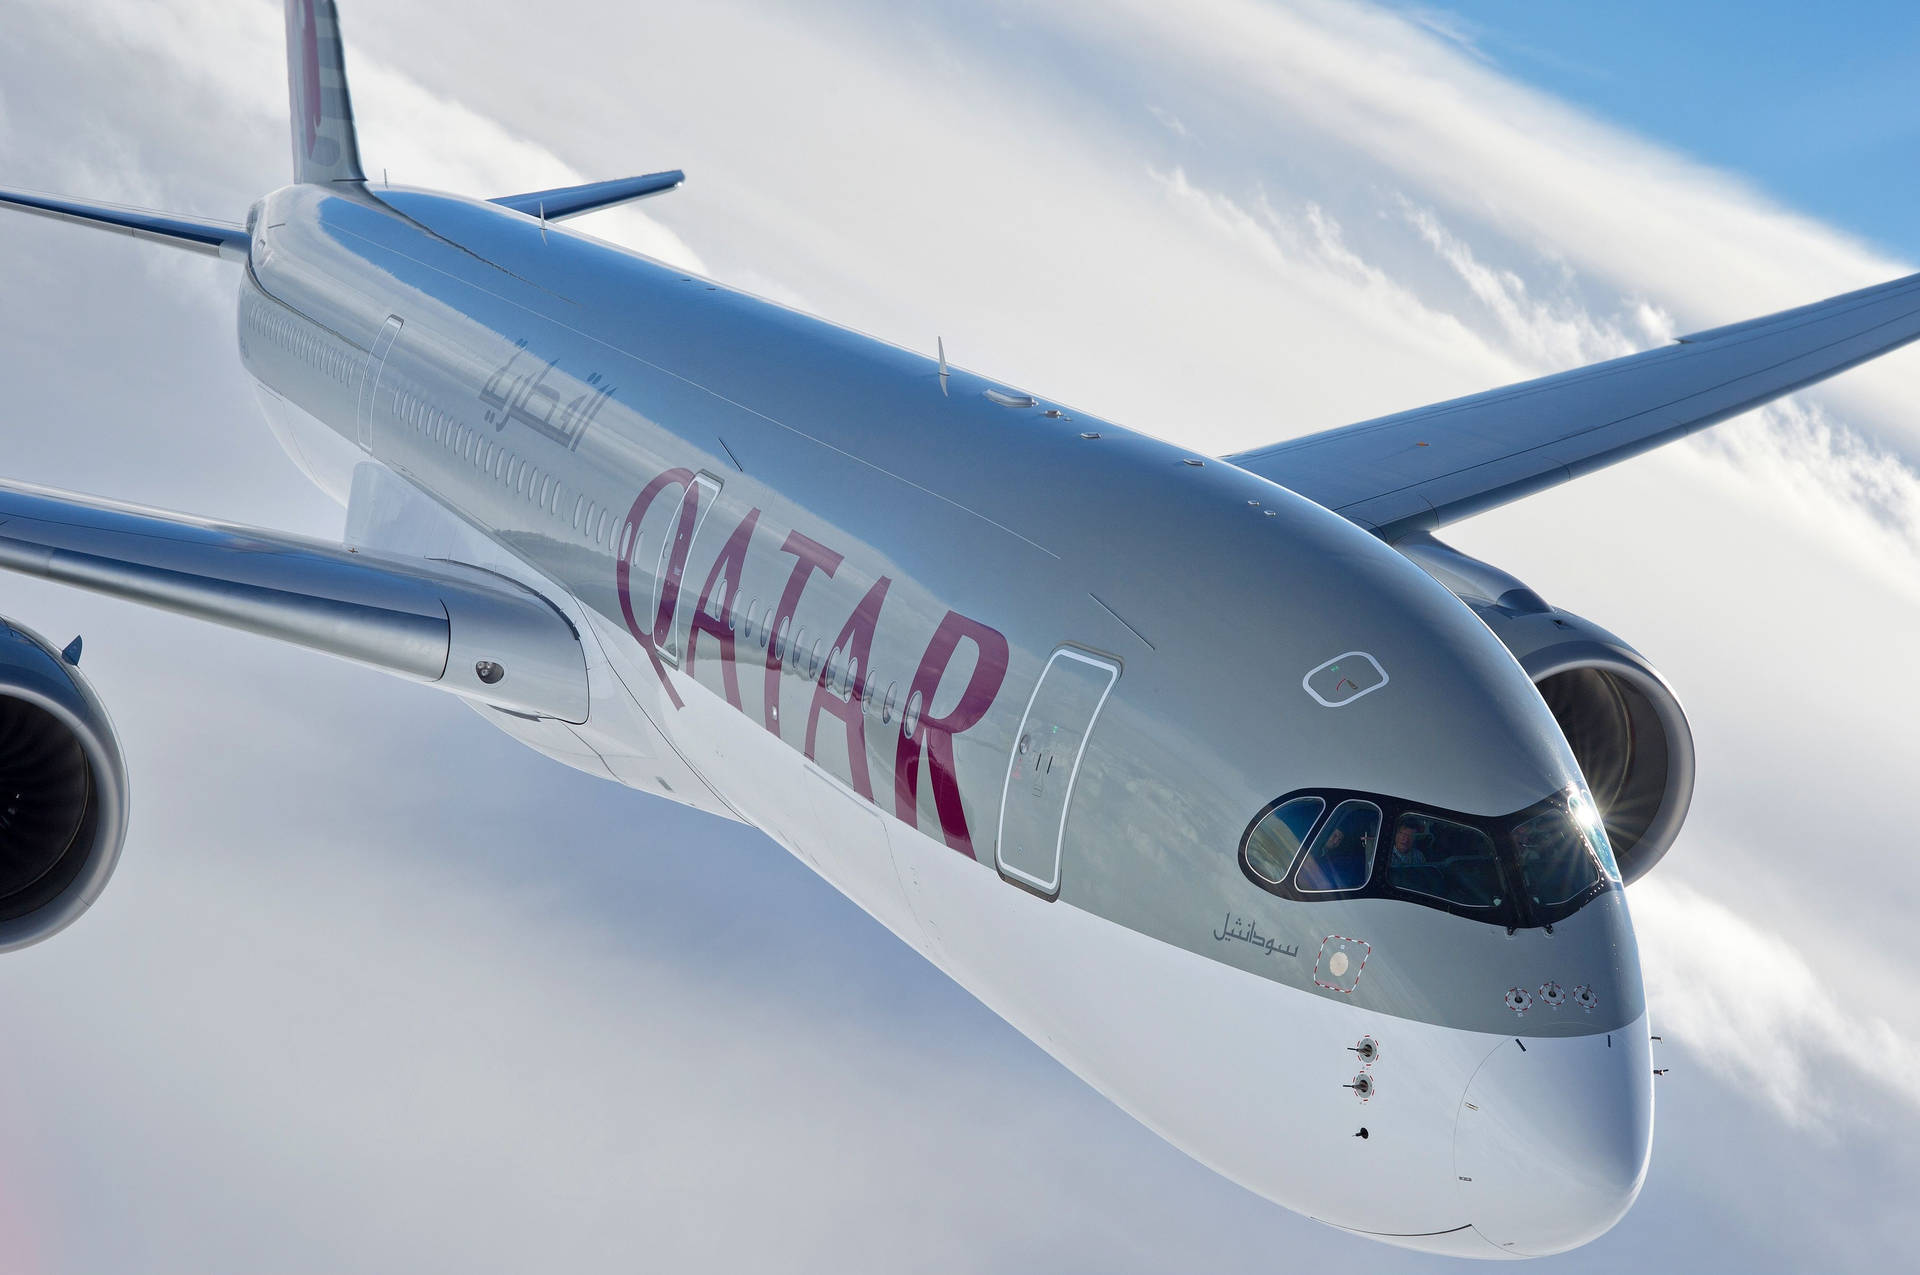 Top 999+ Qatar Airways Wallpaper Full HD, 4K✅Free to Use